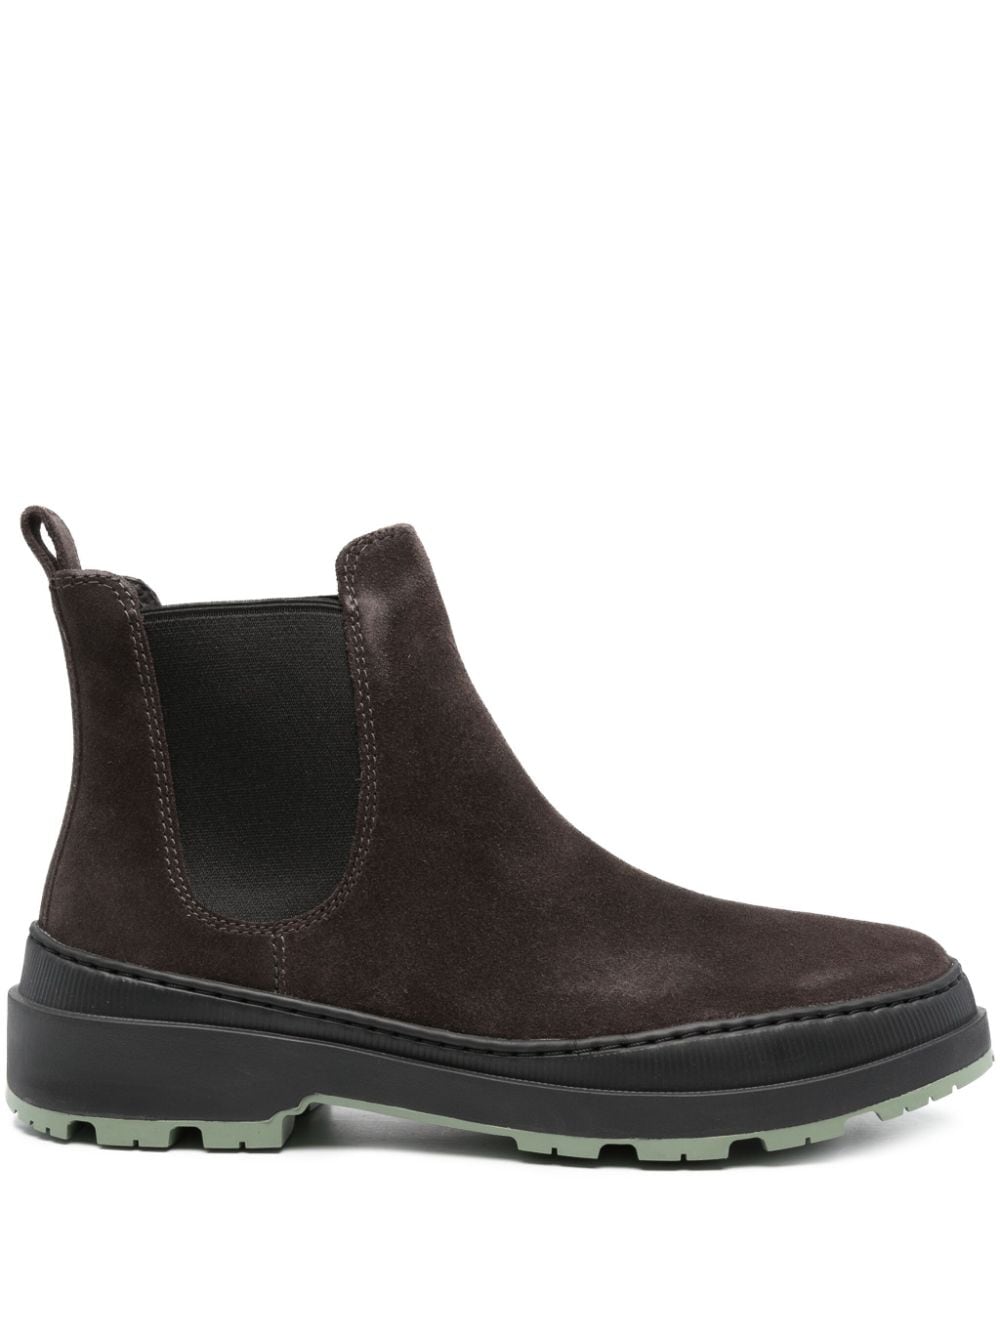 Camper suede leather ankle boots - Brown von Camper